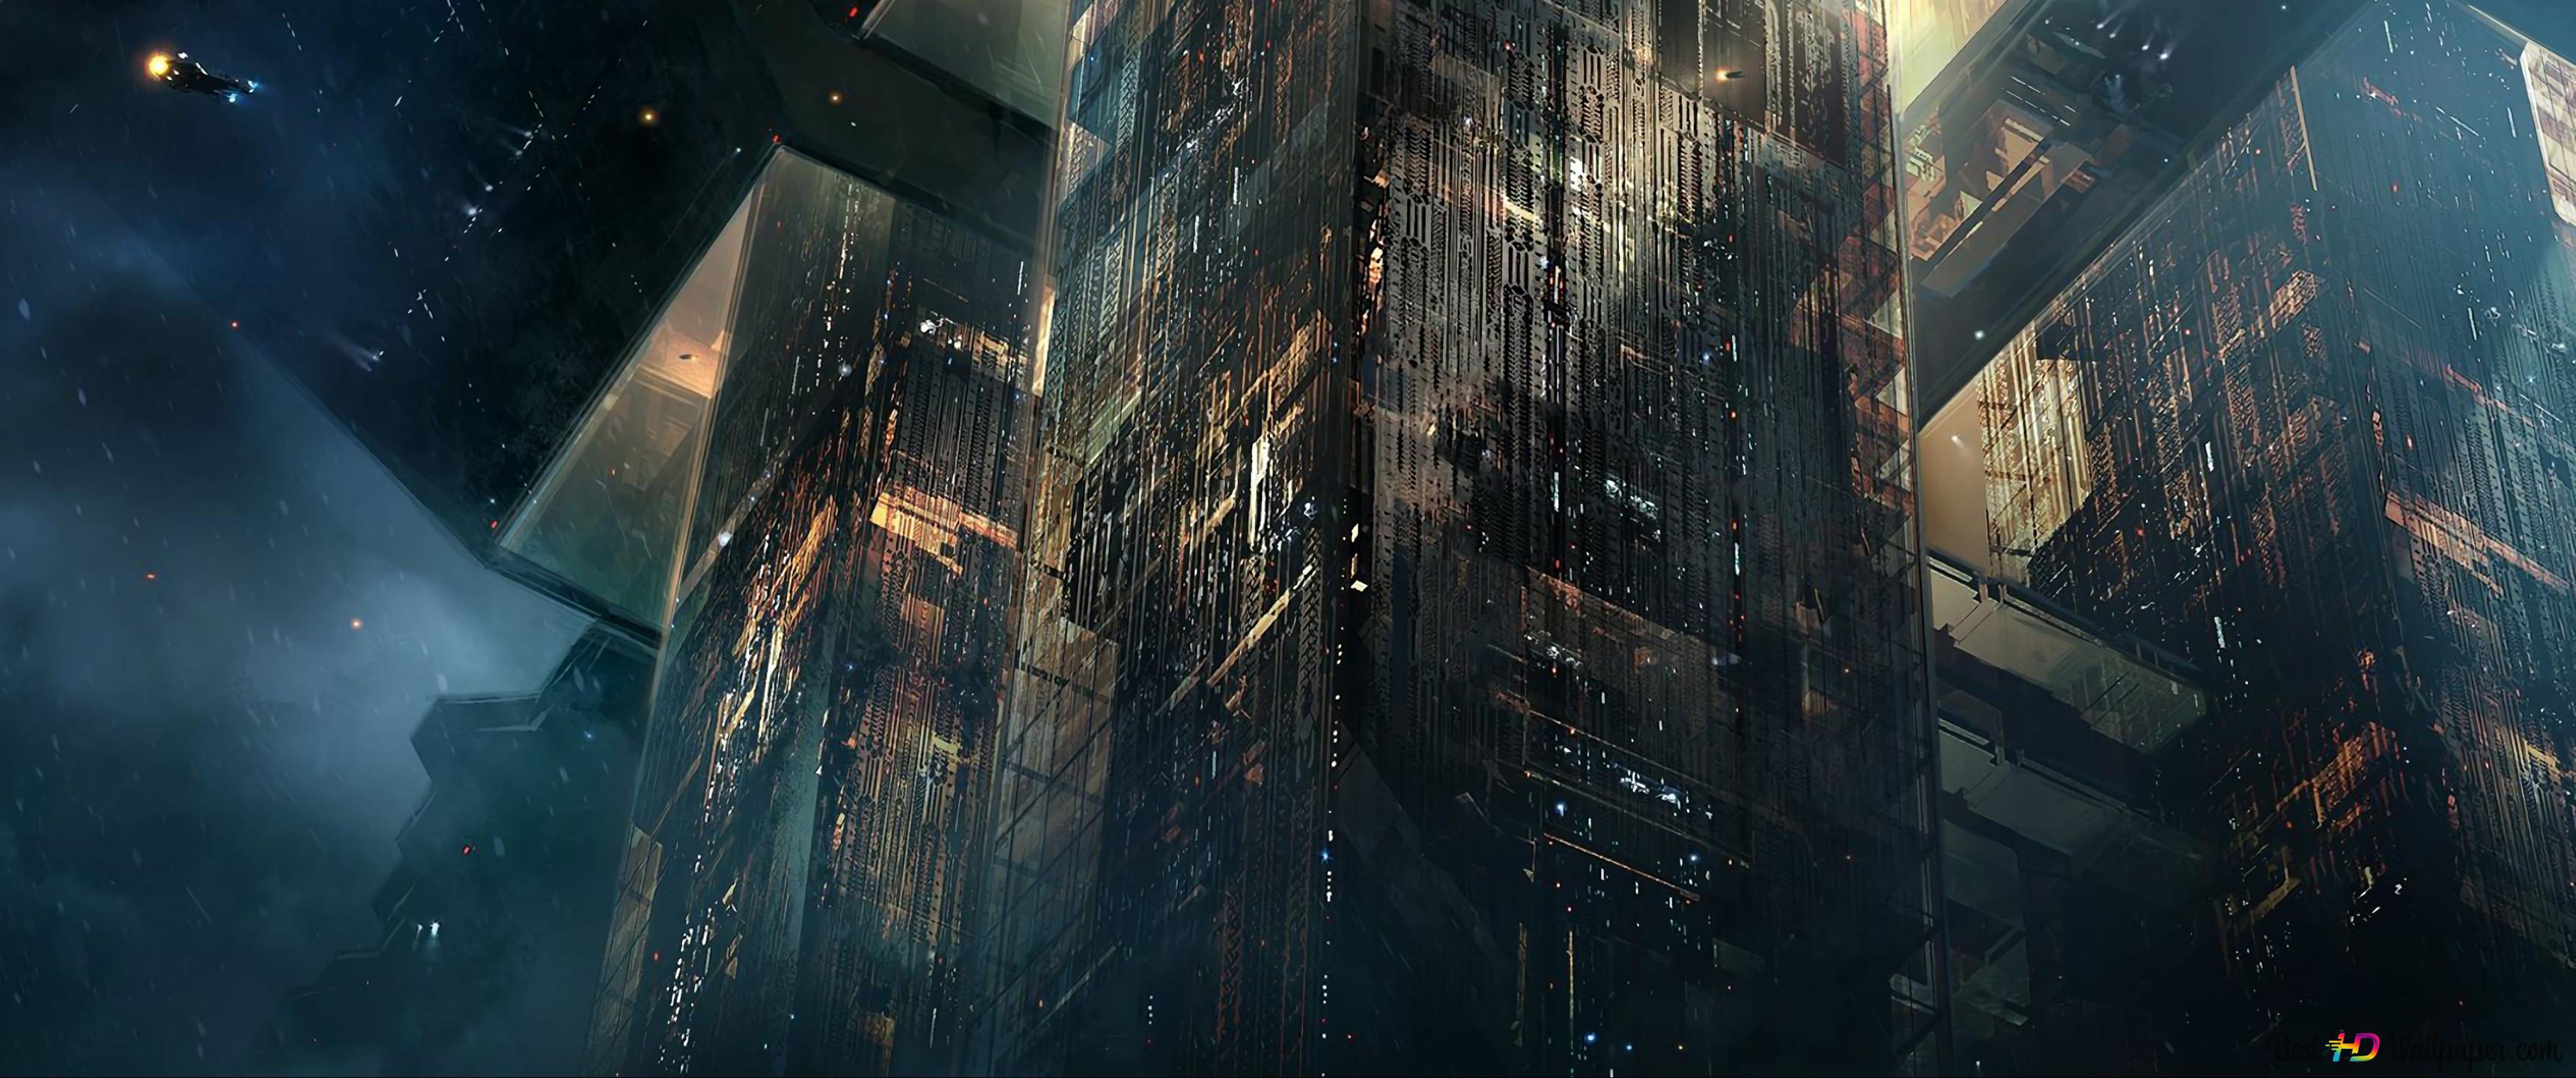 Blade Runner 2049 Backdrop Image Wallpapers